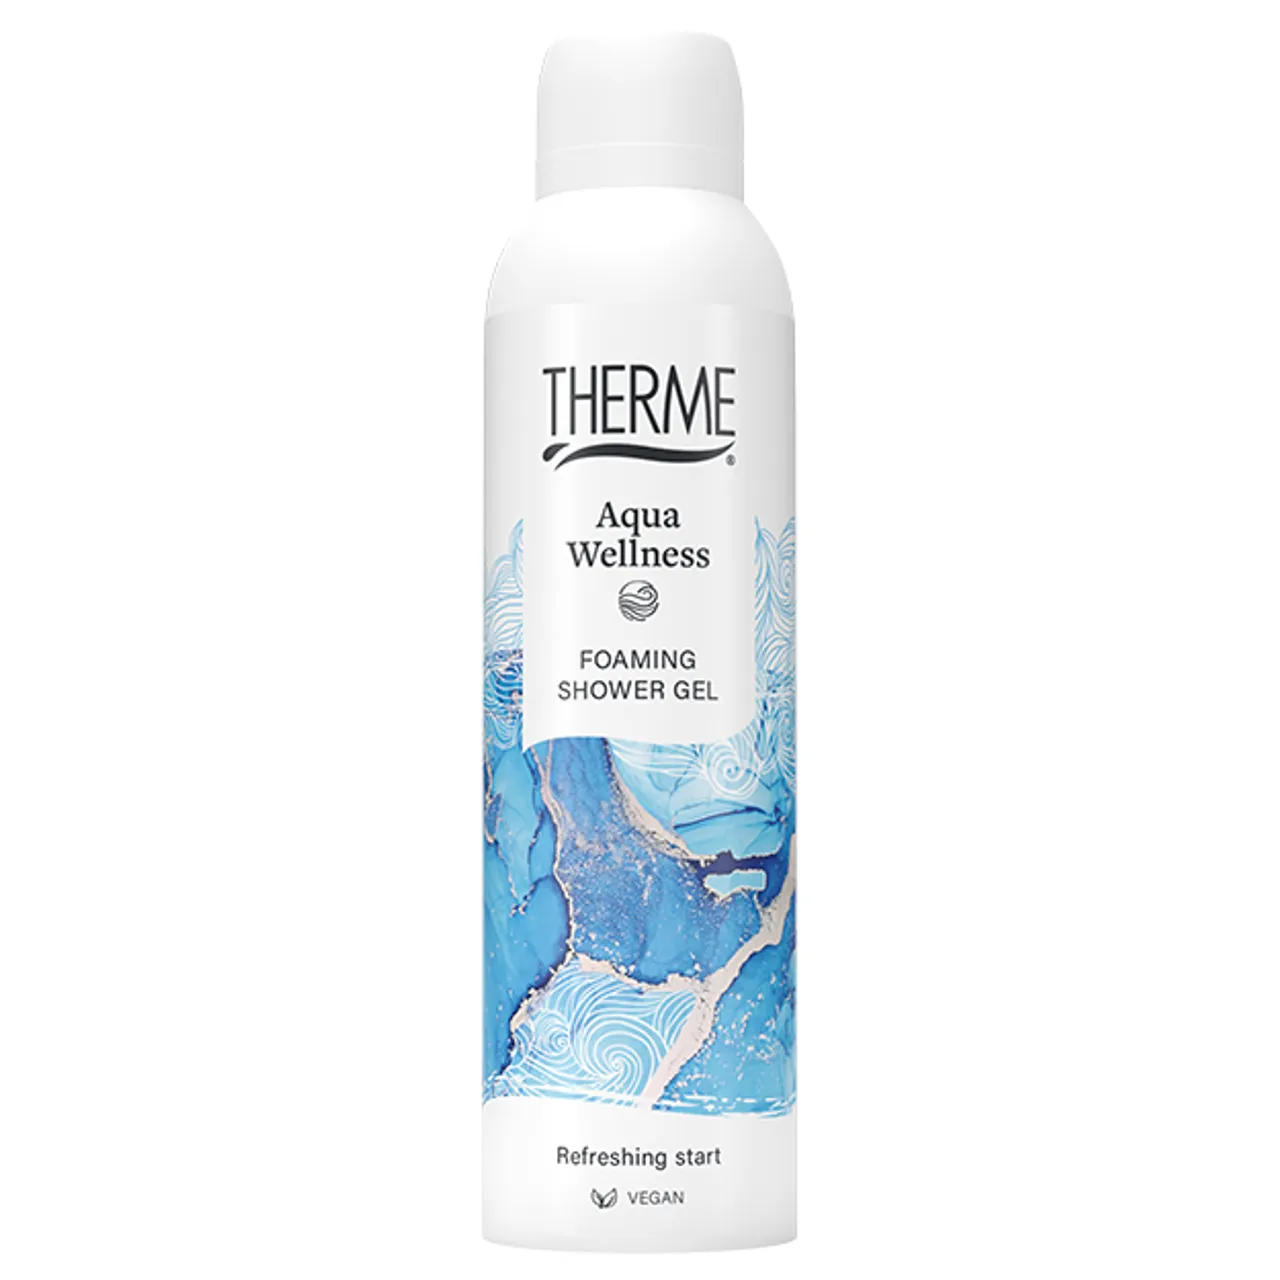 Aqua Wellness Foaming Shower Gel 200 ml